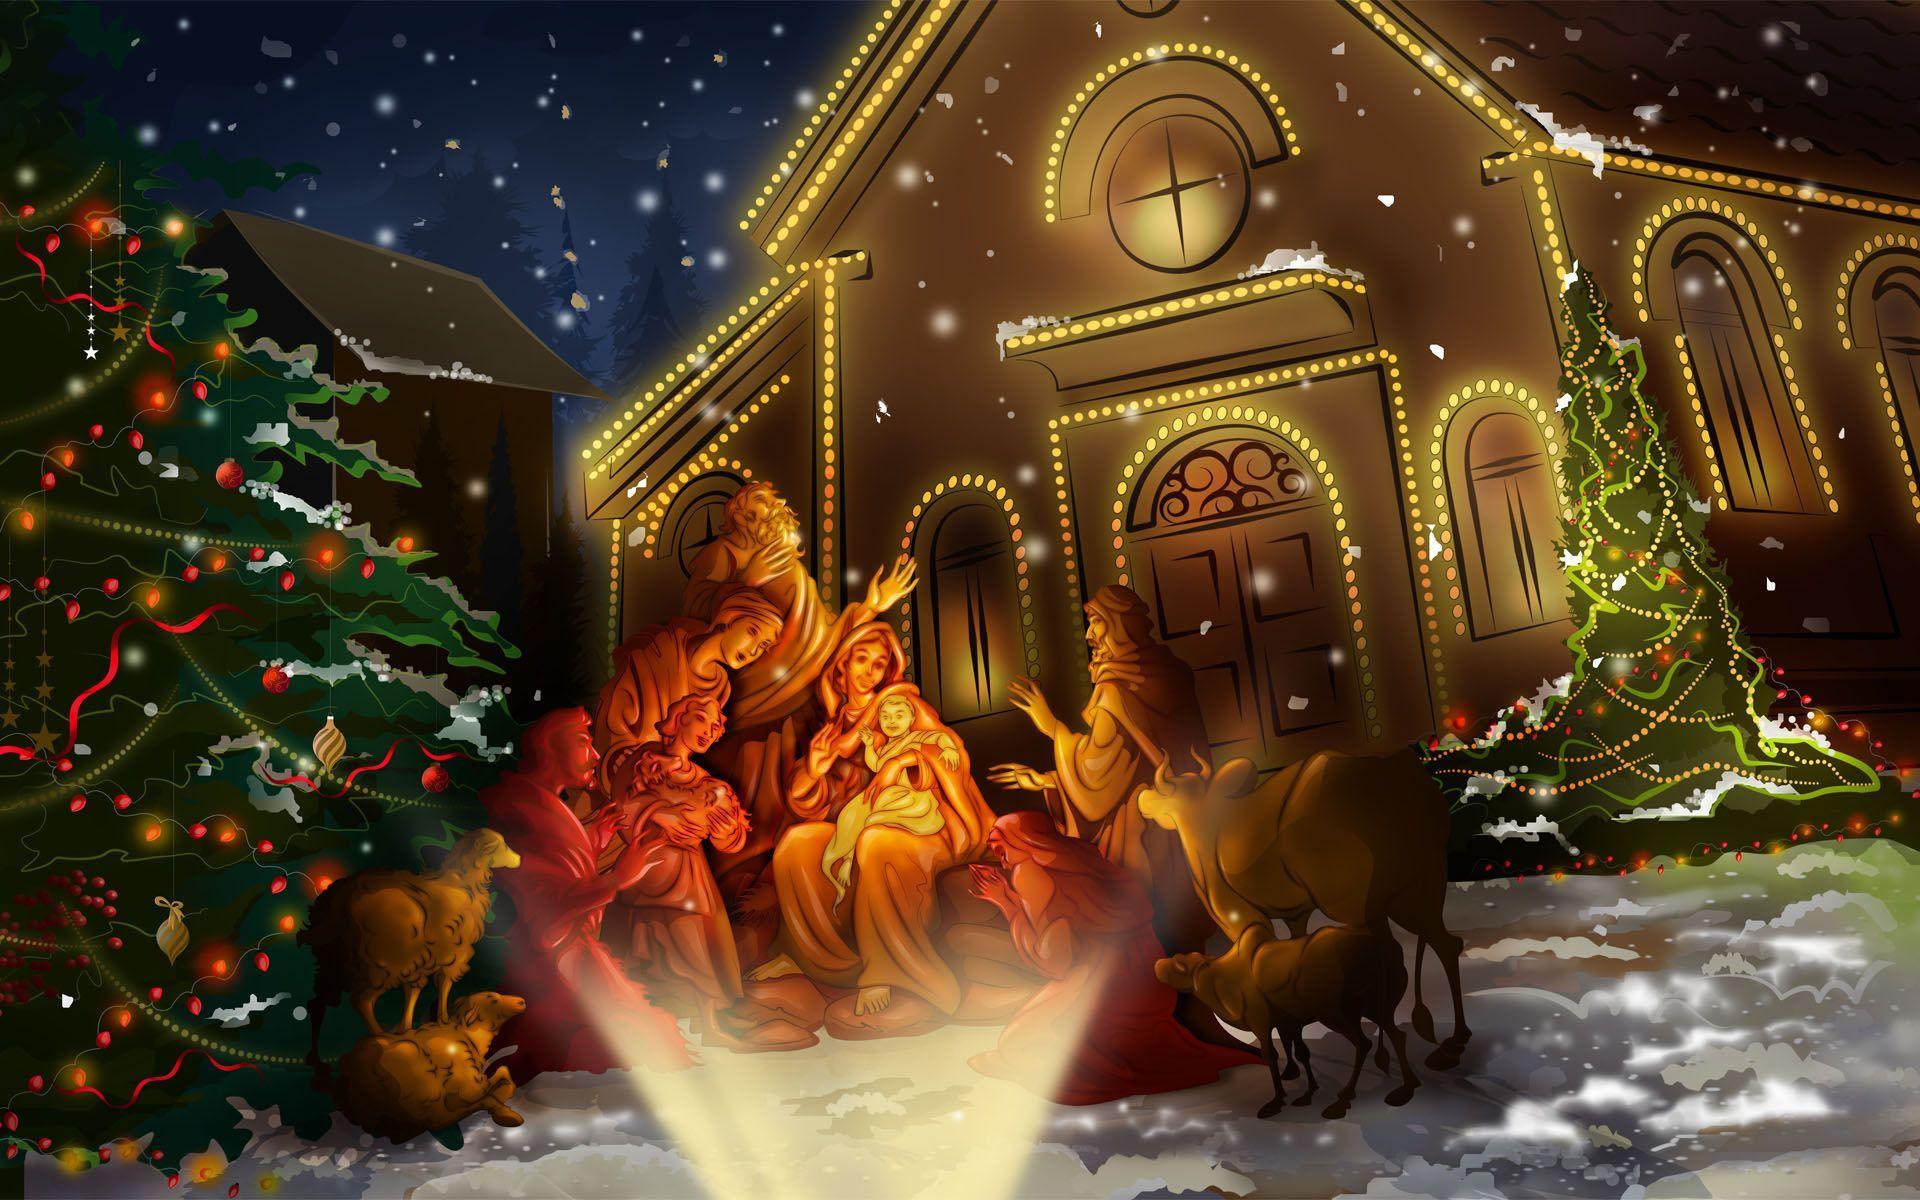 Awesome Celebrating Jesus Birth Wide Pin 287. Christmas Wallpaper Free, Animated Christmas Wallpaper, Christmas Desktop